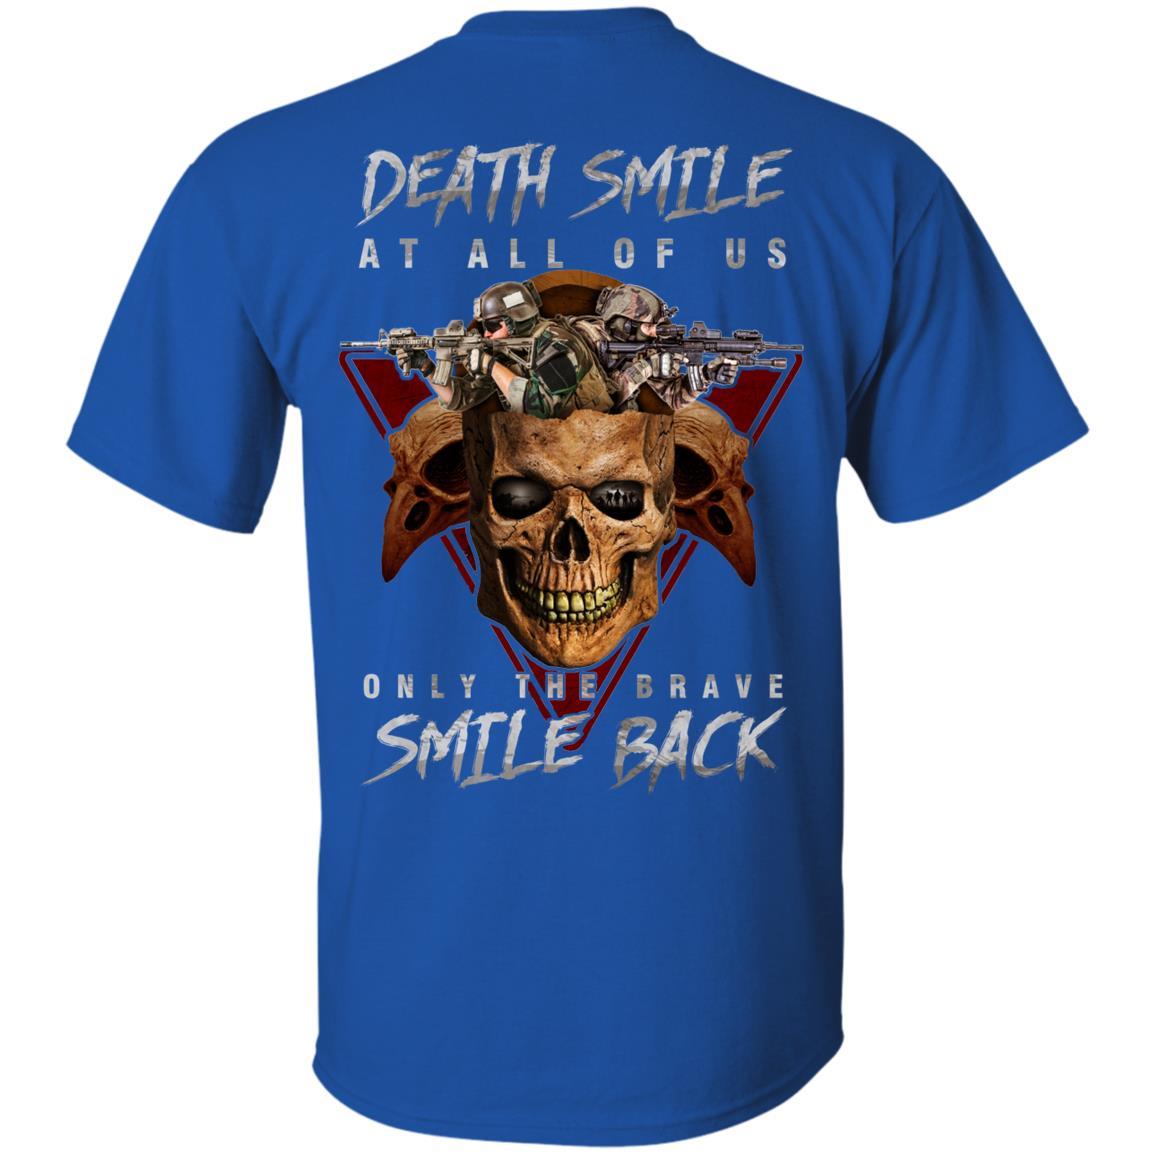 Military T-Shirt "Death Smile At All Of Us Only The Brave Smile Back" Men Back s-TShirt-General-Veterans Nation